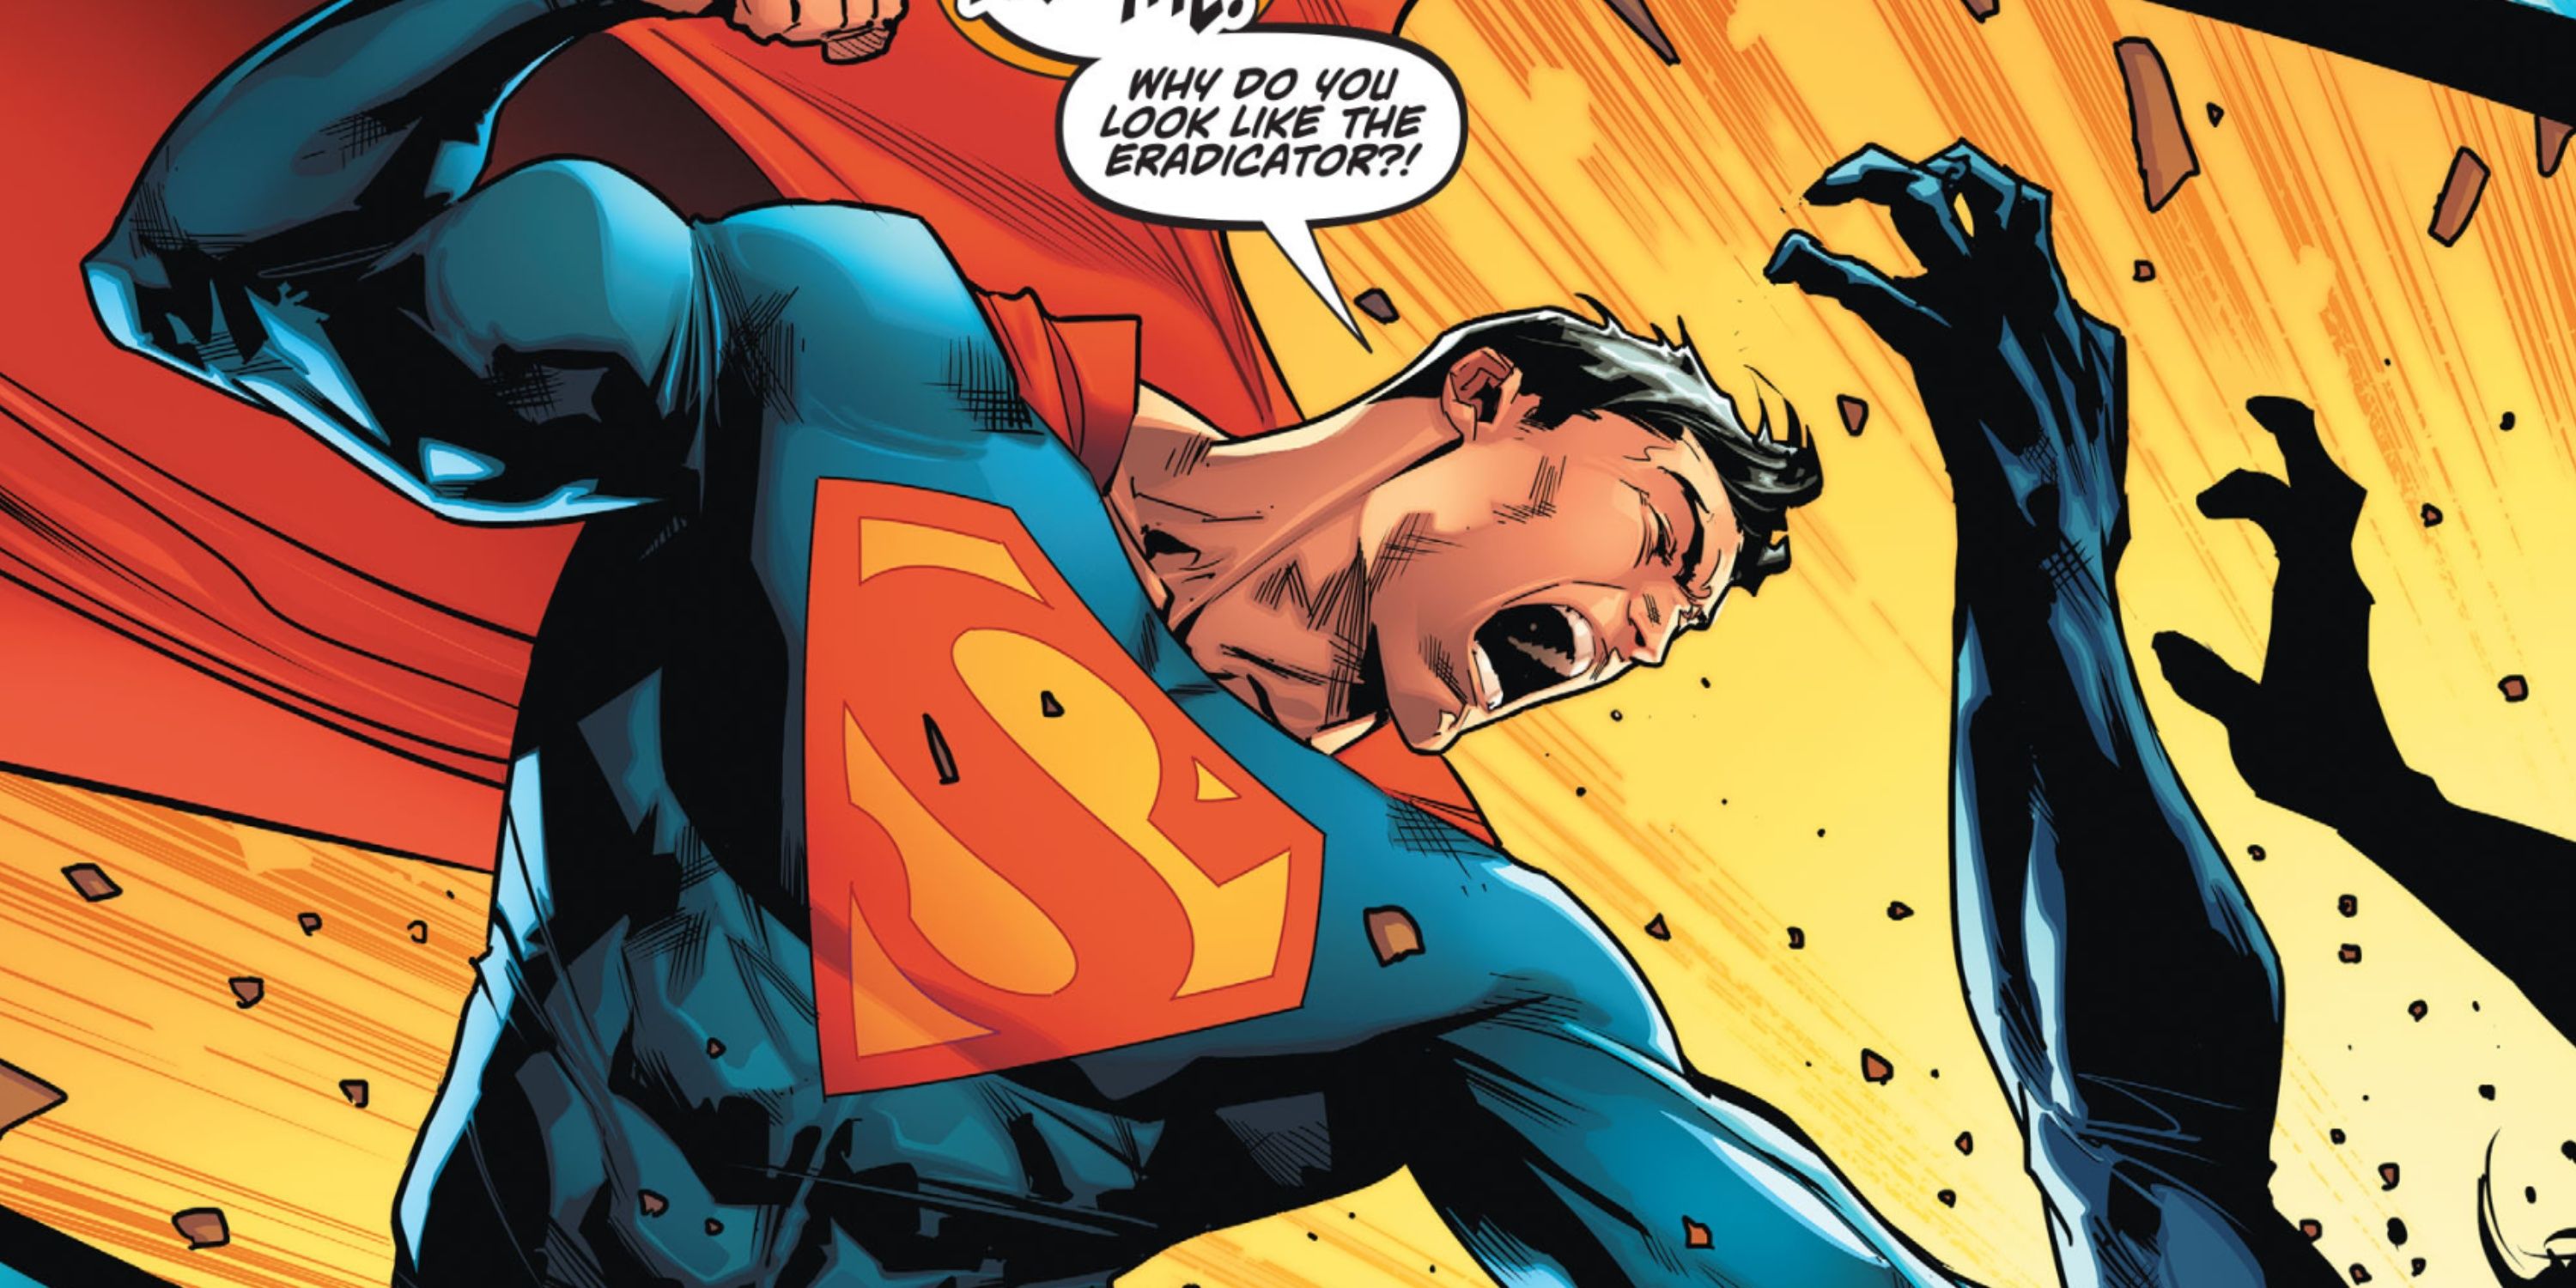 Superman punches the Eradicator